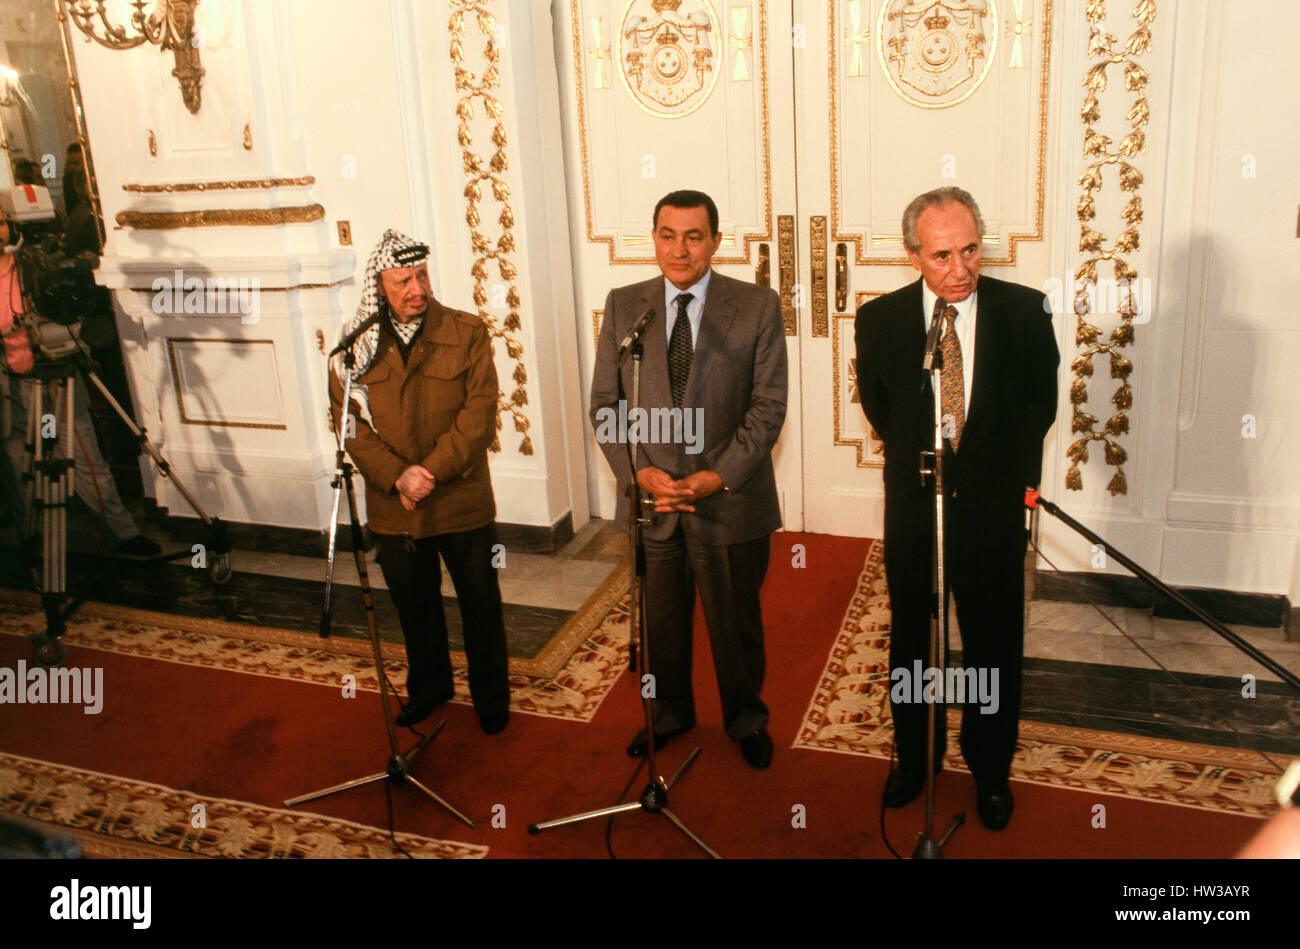 Cairo, Egypt - 1994 - Egyptian President Hosni Mubarak hosts peace talks between Palestinian Leader Yasser Arafat and Israeli Foreign Minister Shimon Peres. Stock Photo